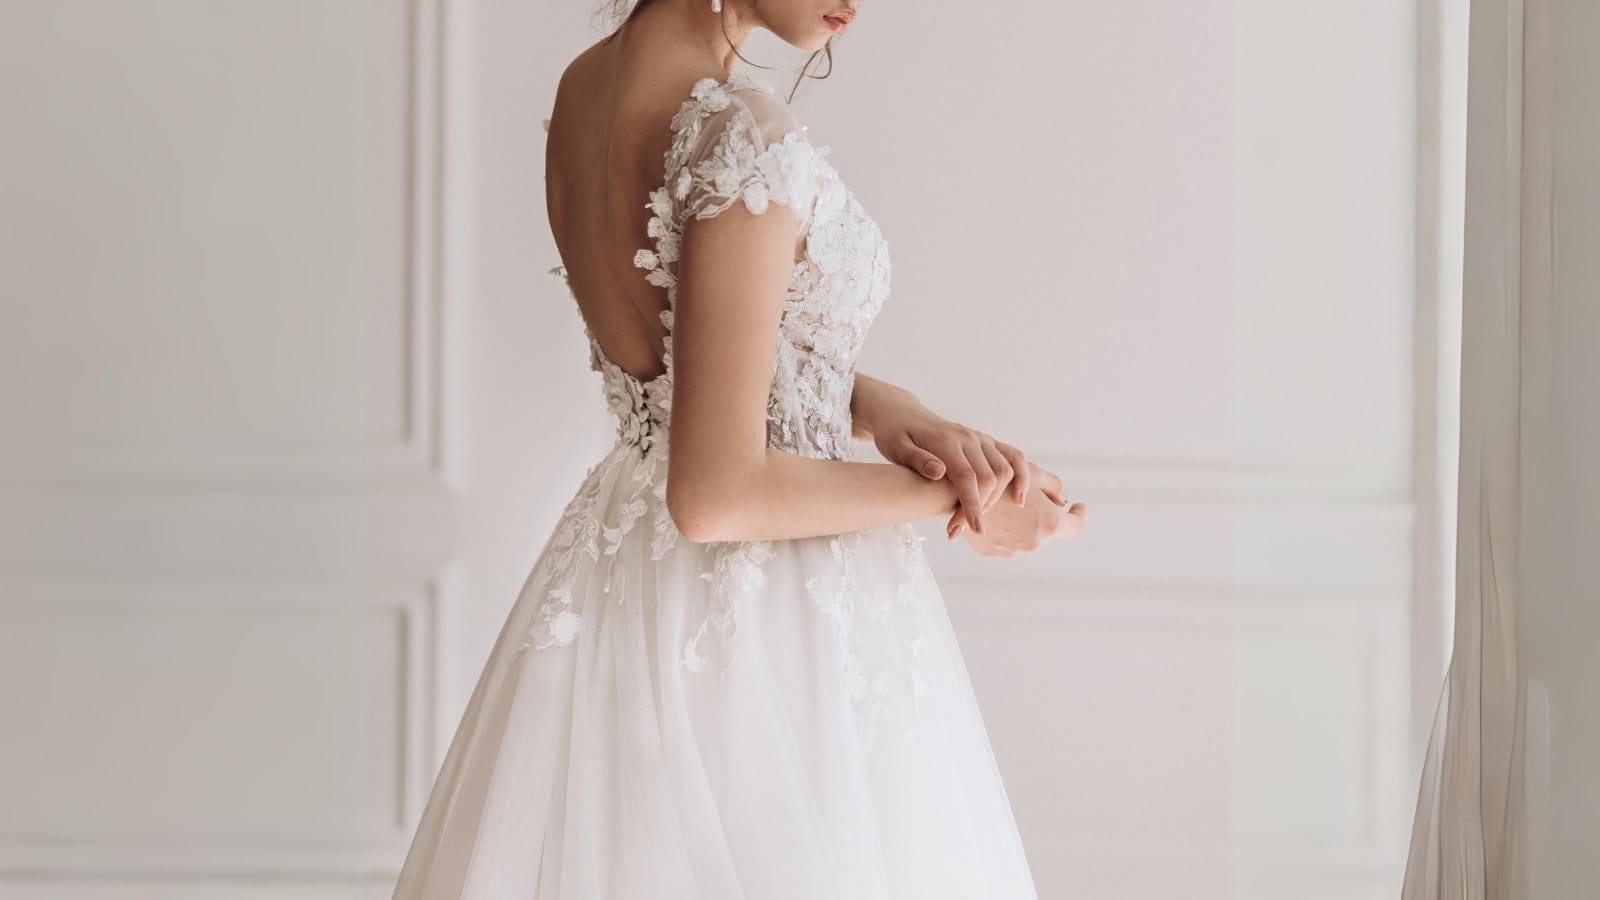 Lace Wedding dress fabric